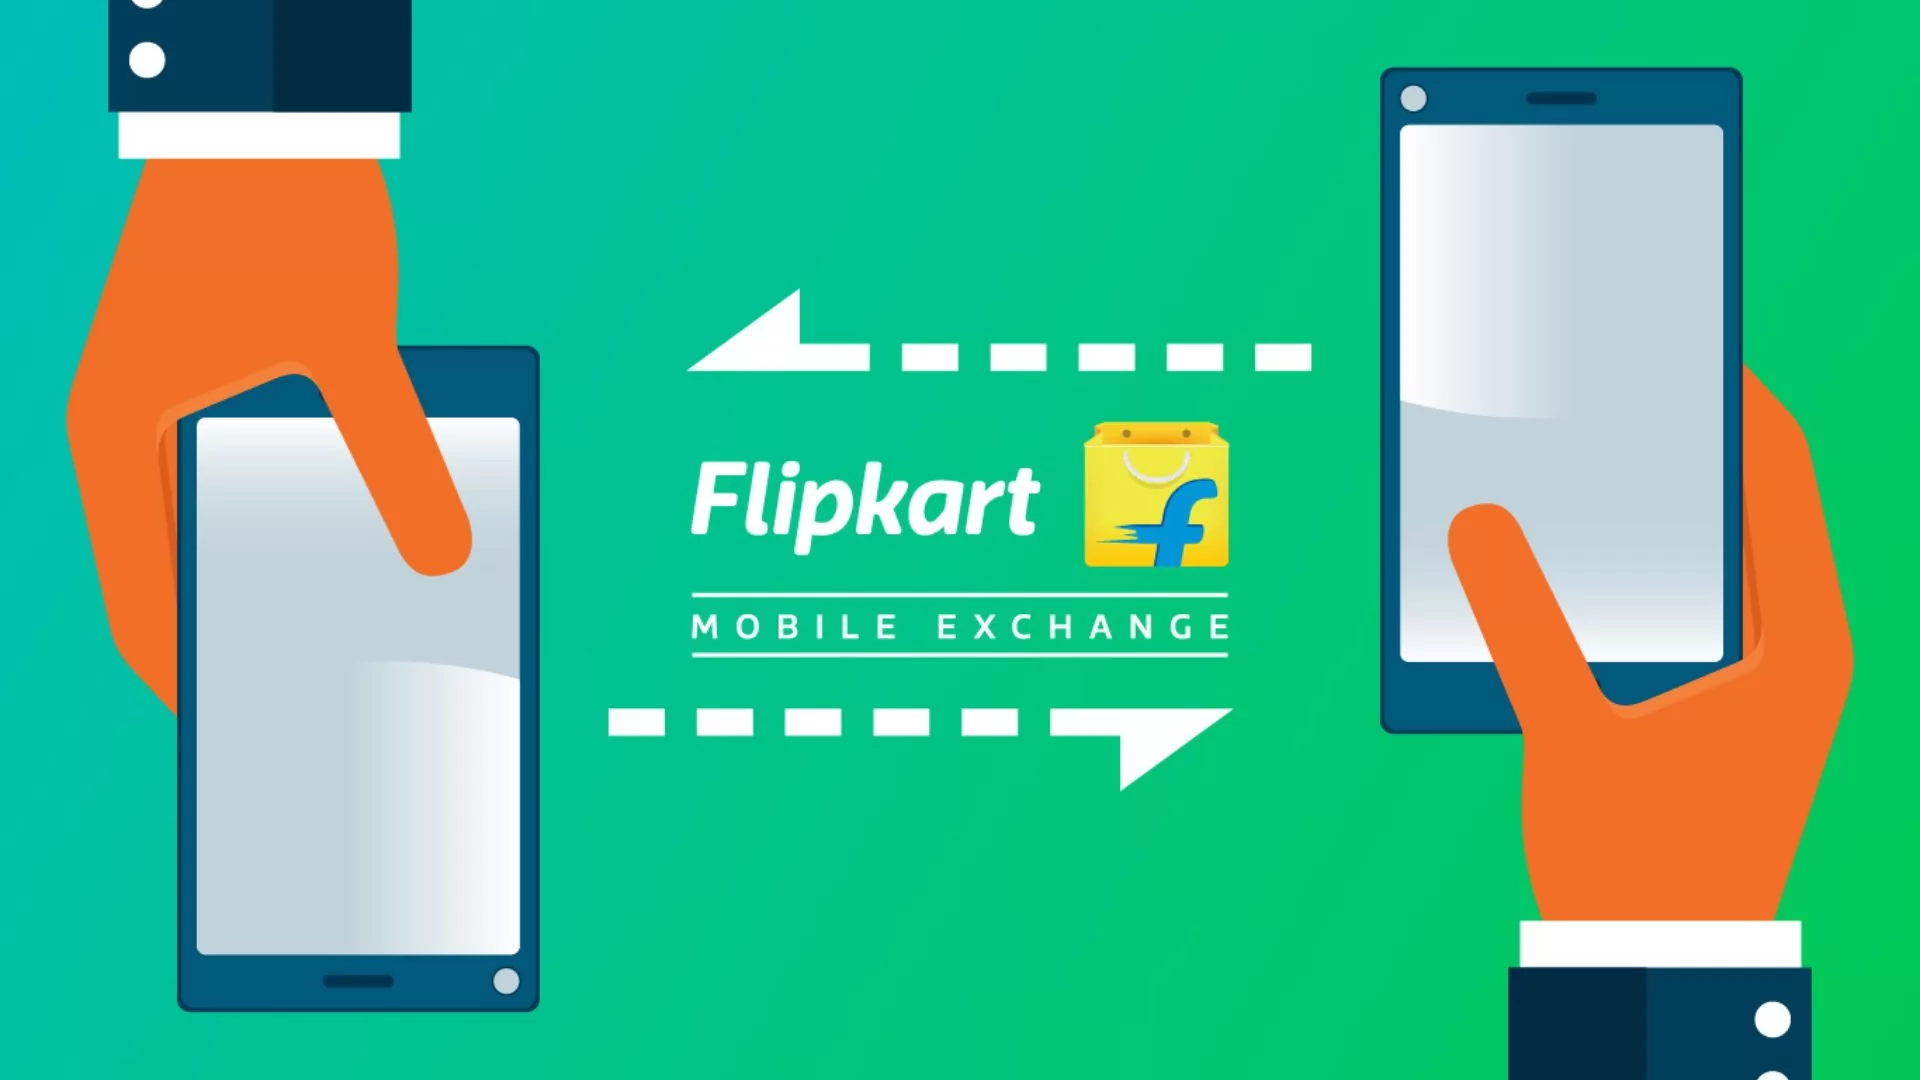 Fipkart mobile exchange 